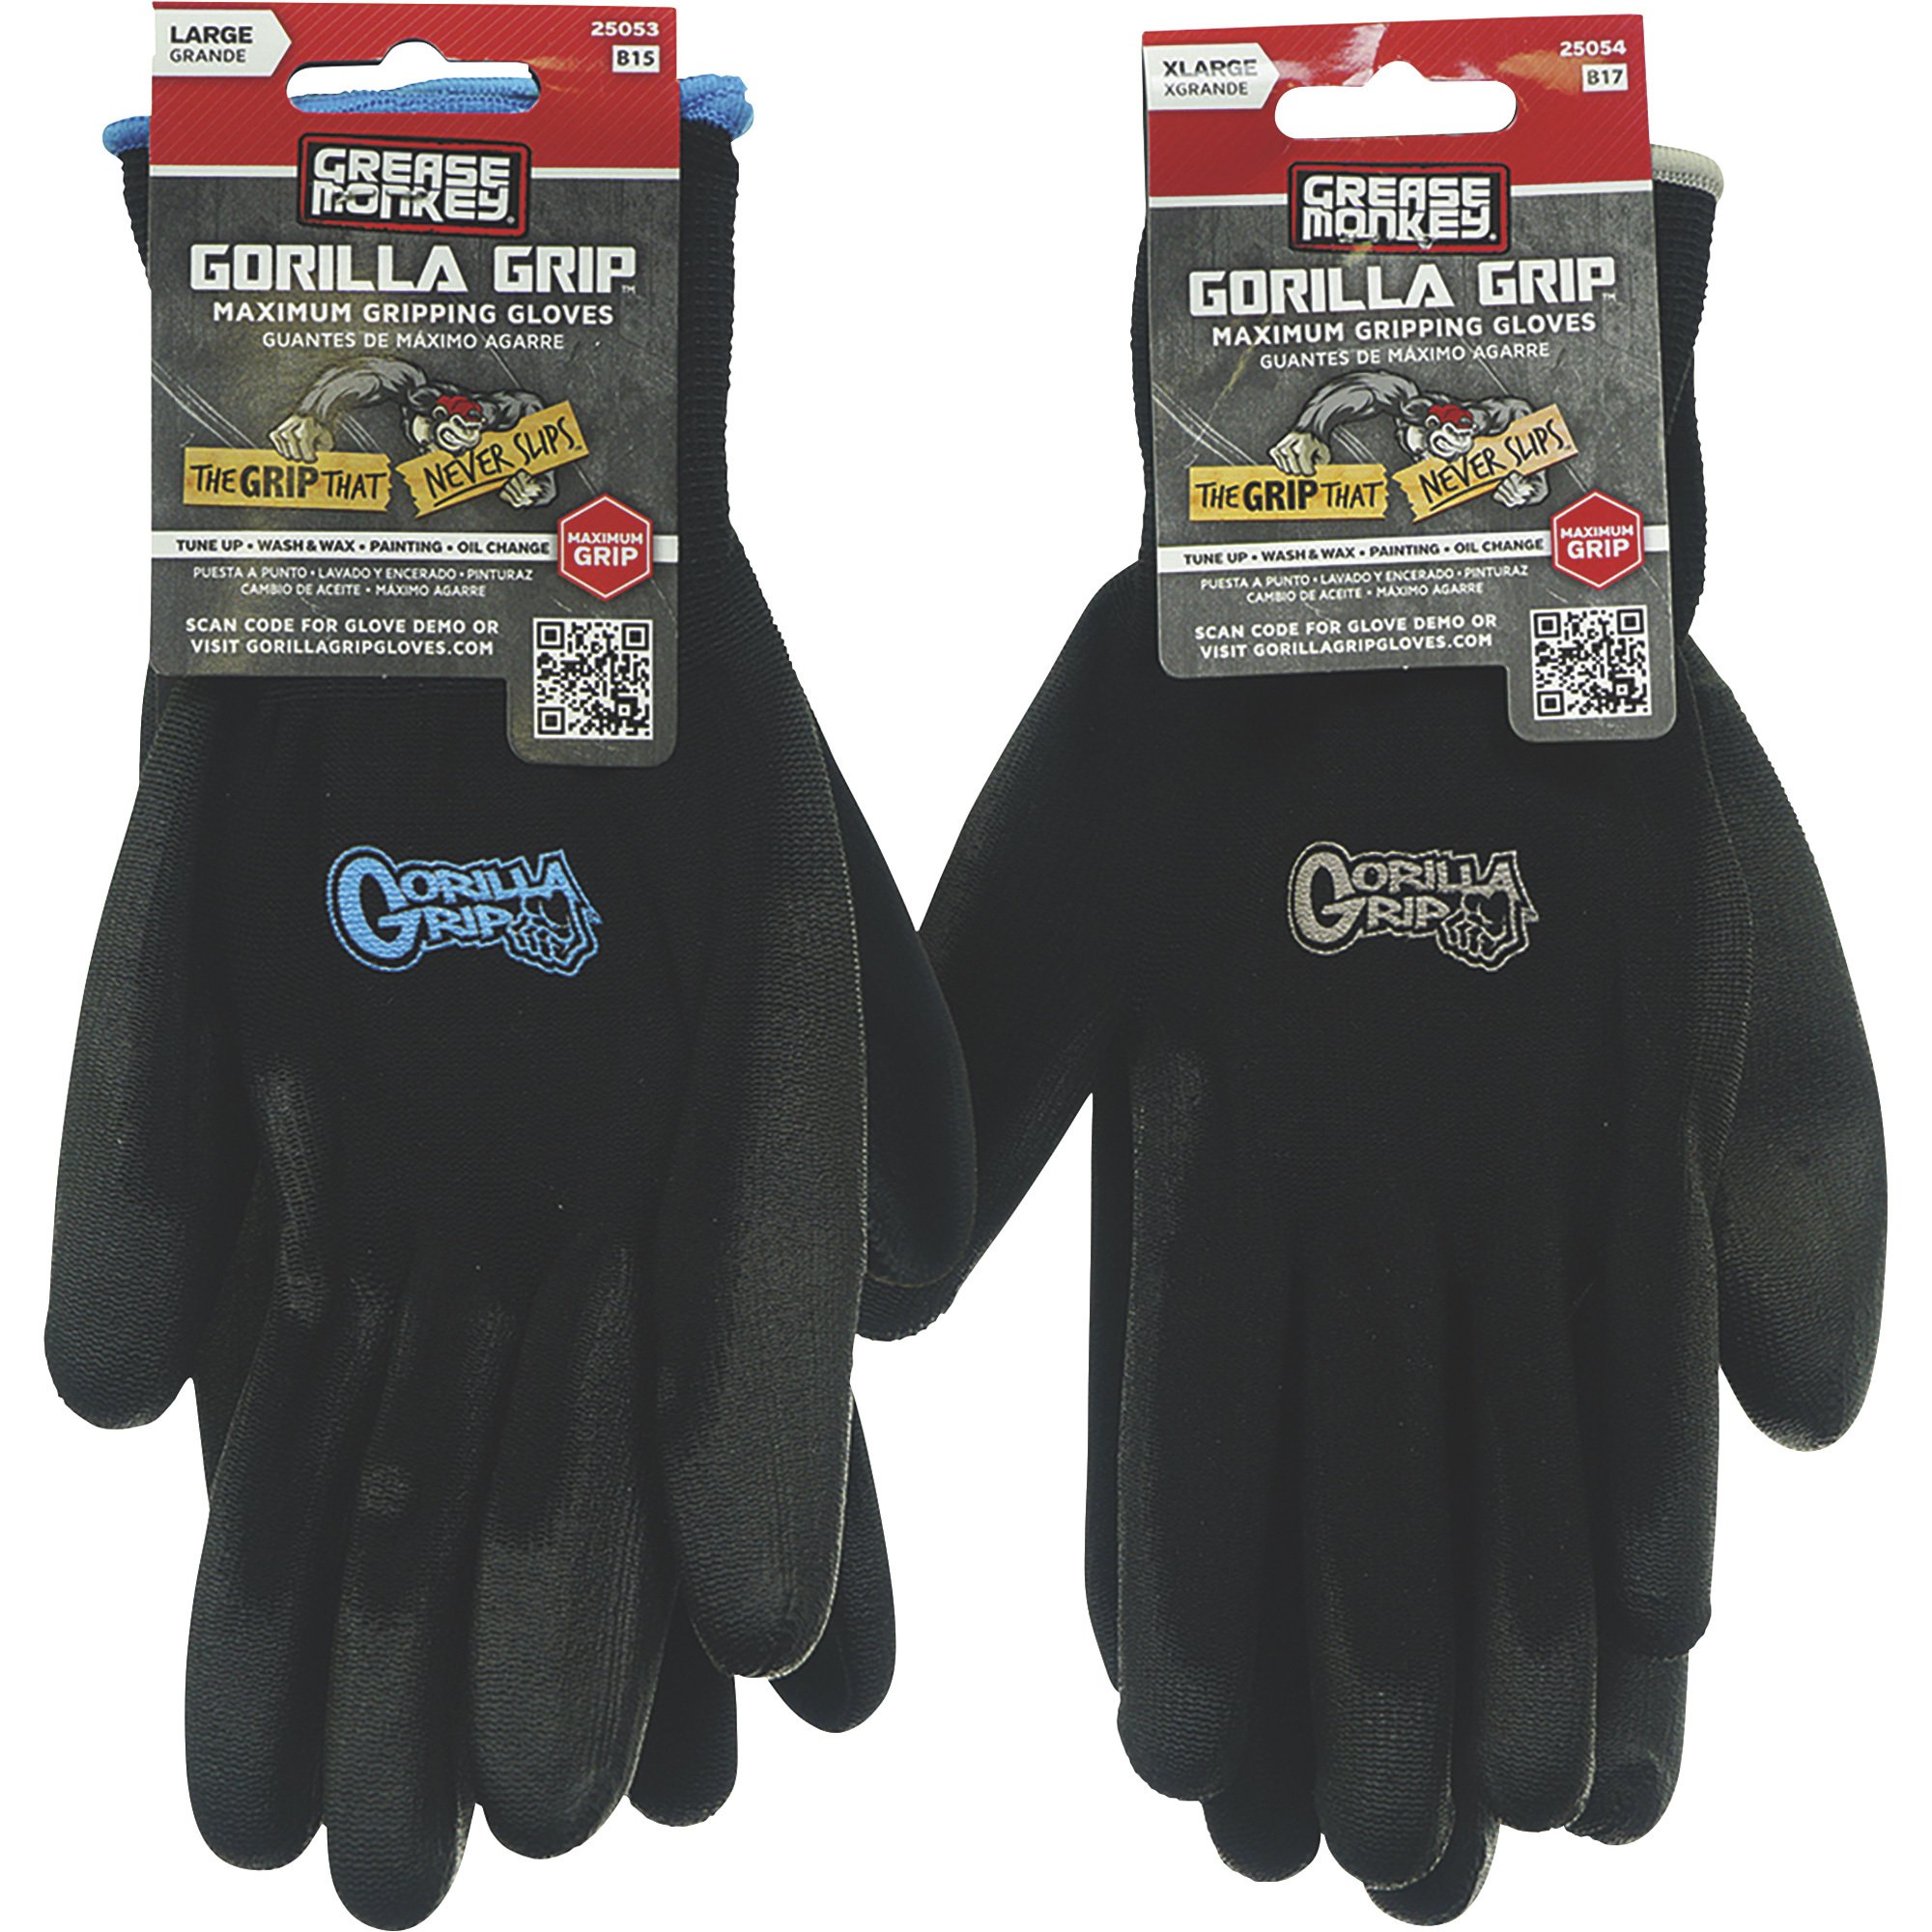 Grease Monkey Gorilla Grip Slip Resistant All Purpose Work Gloves